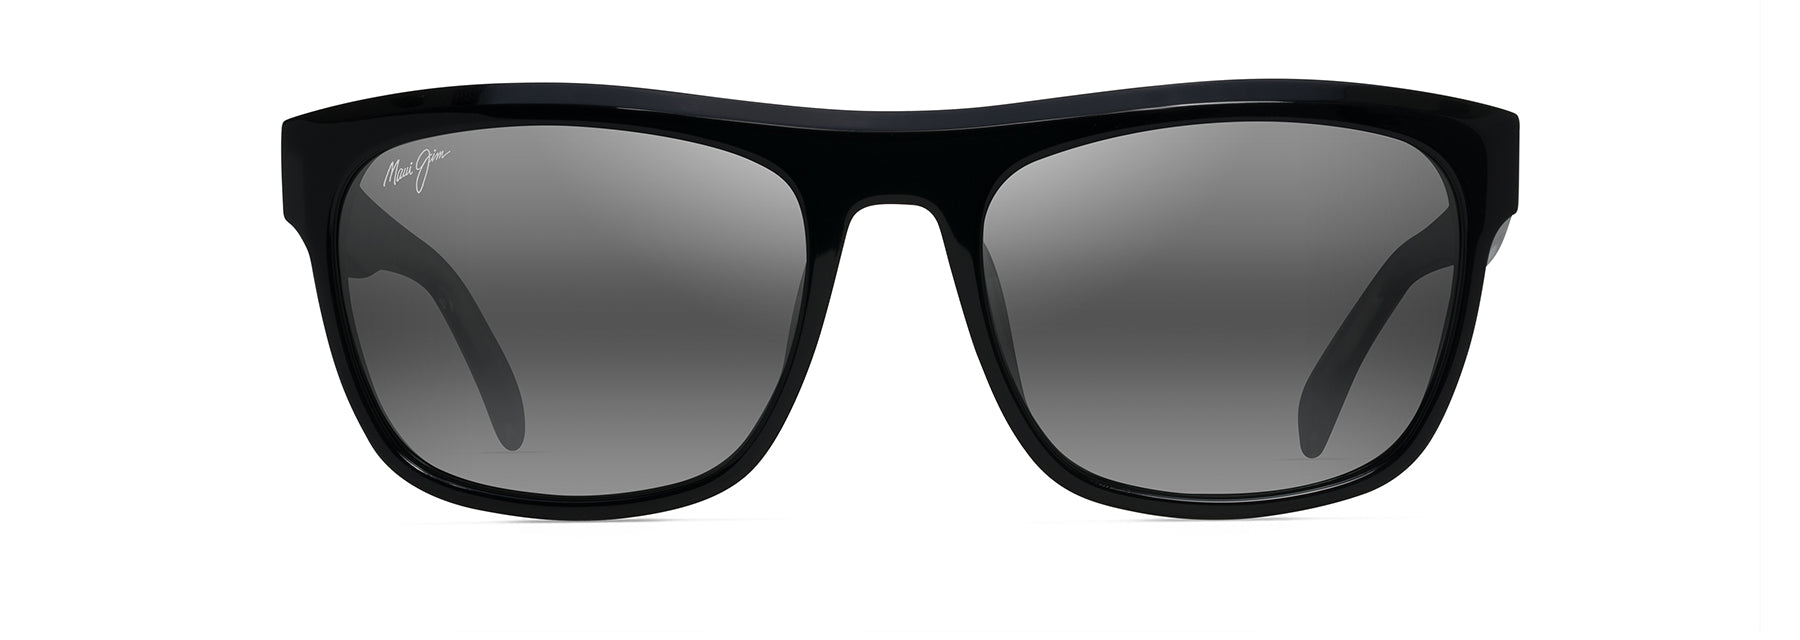 Maui Jim S-Turns Sunglasses